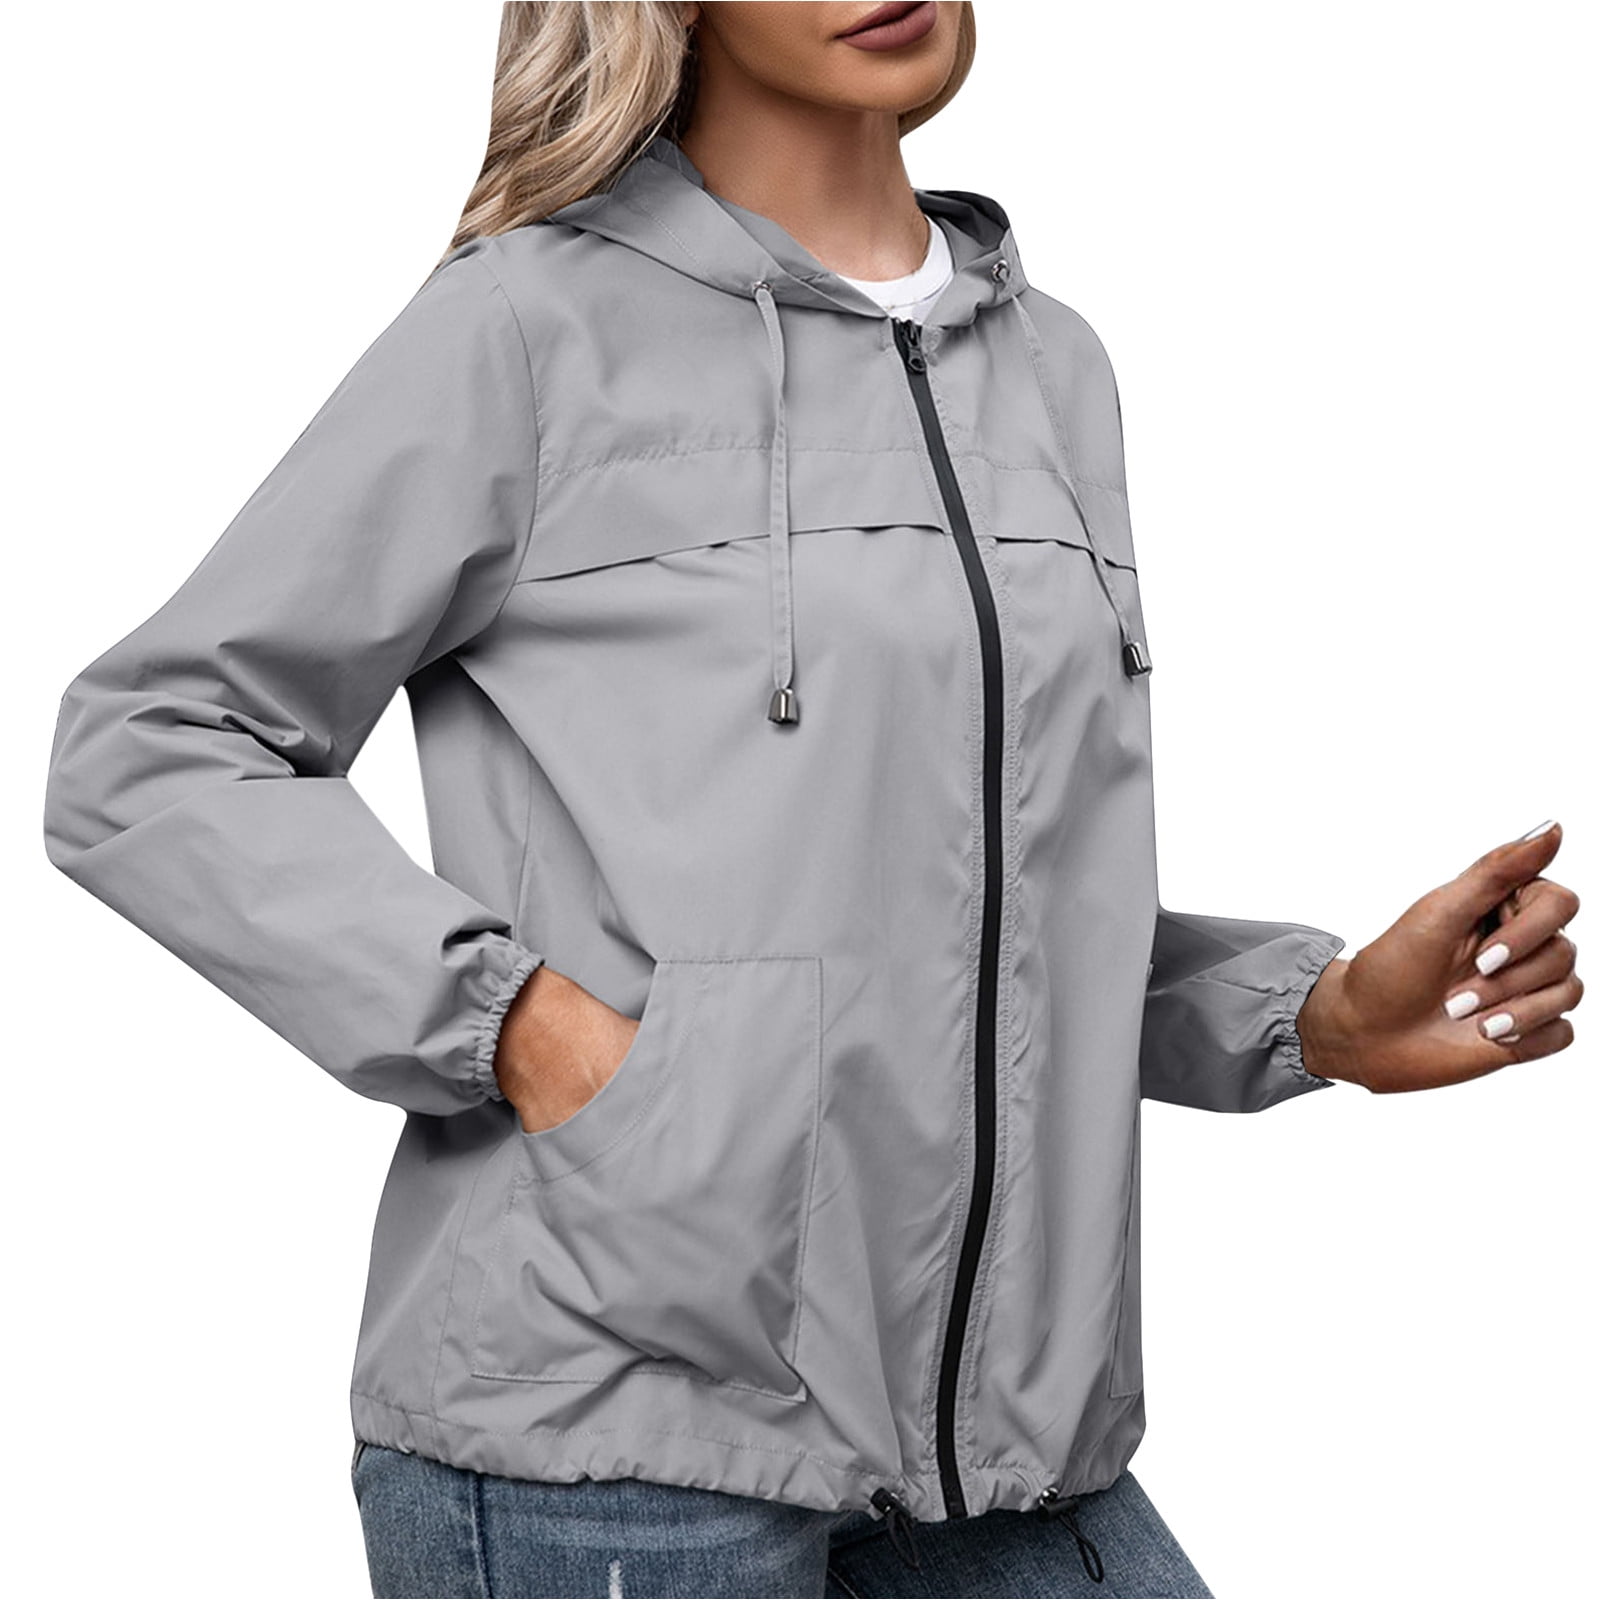 asdoklhq Womens Tops Clearance Under $5,Women Rain Jacket Outdoor Solid Waterproof  Hooded Raincoat Windproof - Walmart.com